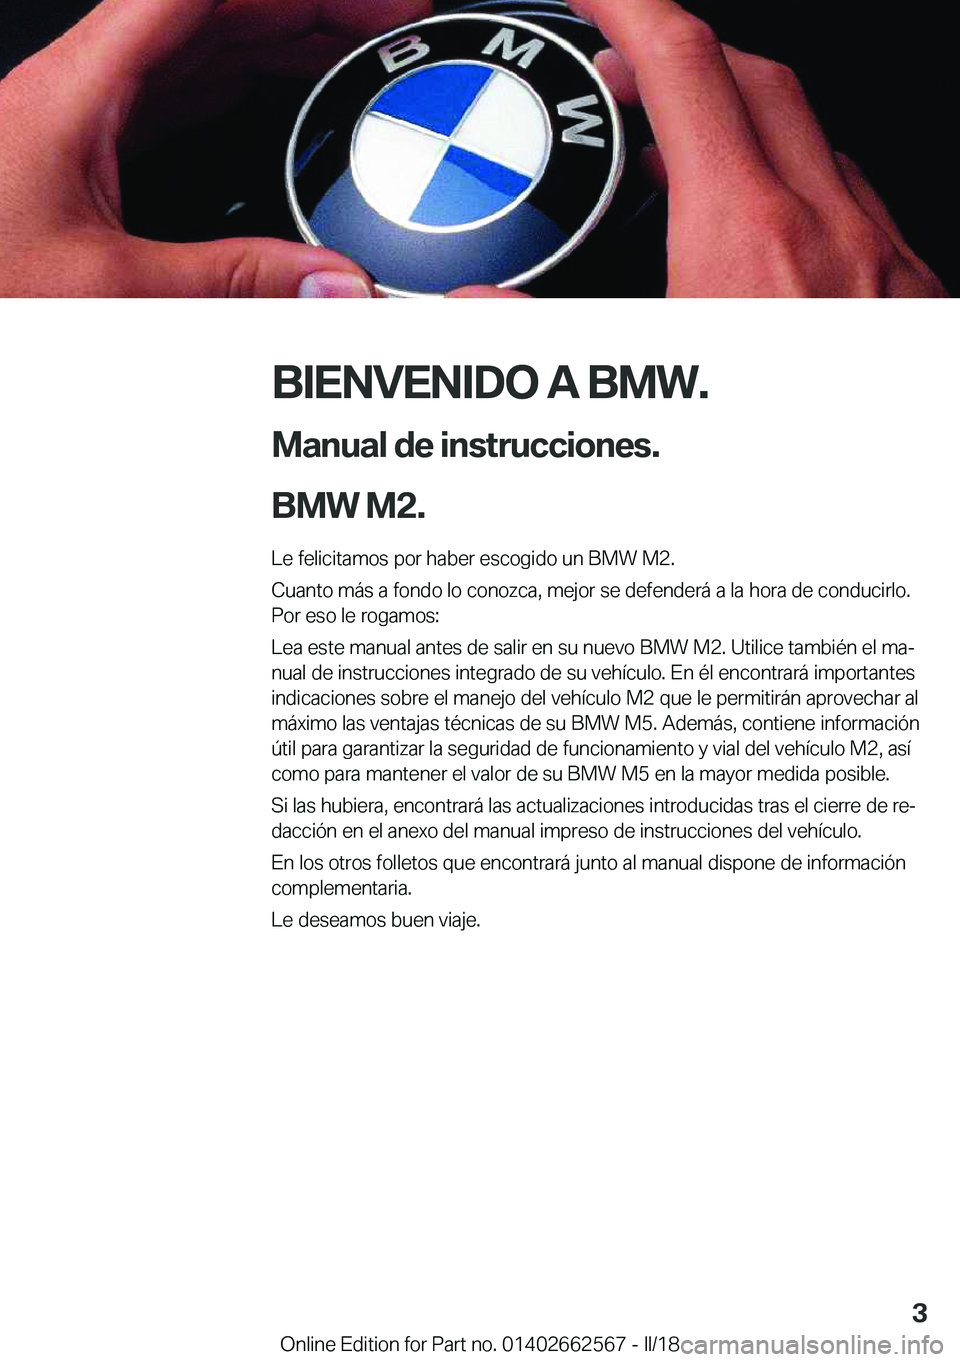 BMW M2 2018  Manuales de Empleo (in Spanish) �B�I�E�N�V�E�N�I�D�O��A��B�M�W�.
�M�a�n�u�a�l��d�e��i�n�s�t�r�u�c�c�i�o�n�e�s�.
�B�M�W��M�2�.� �L�e� �f�e�l�i�c�i�t�a�m�o�s� �p�o�r� �h�a�b�e�r� �e�s�c�o�g�i�d�o� �u�n� �B�M�W� �M�2�.
�C�u�a�n�t